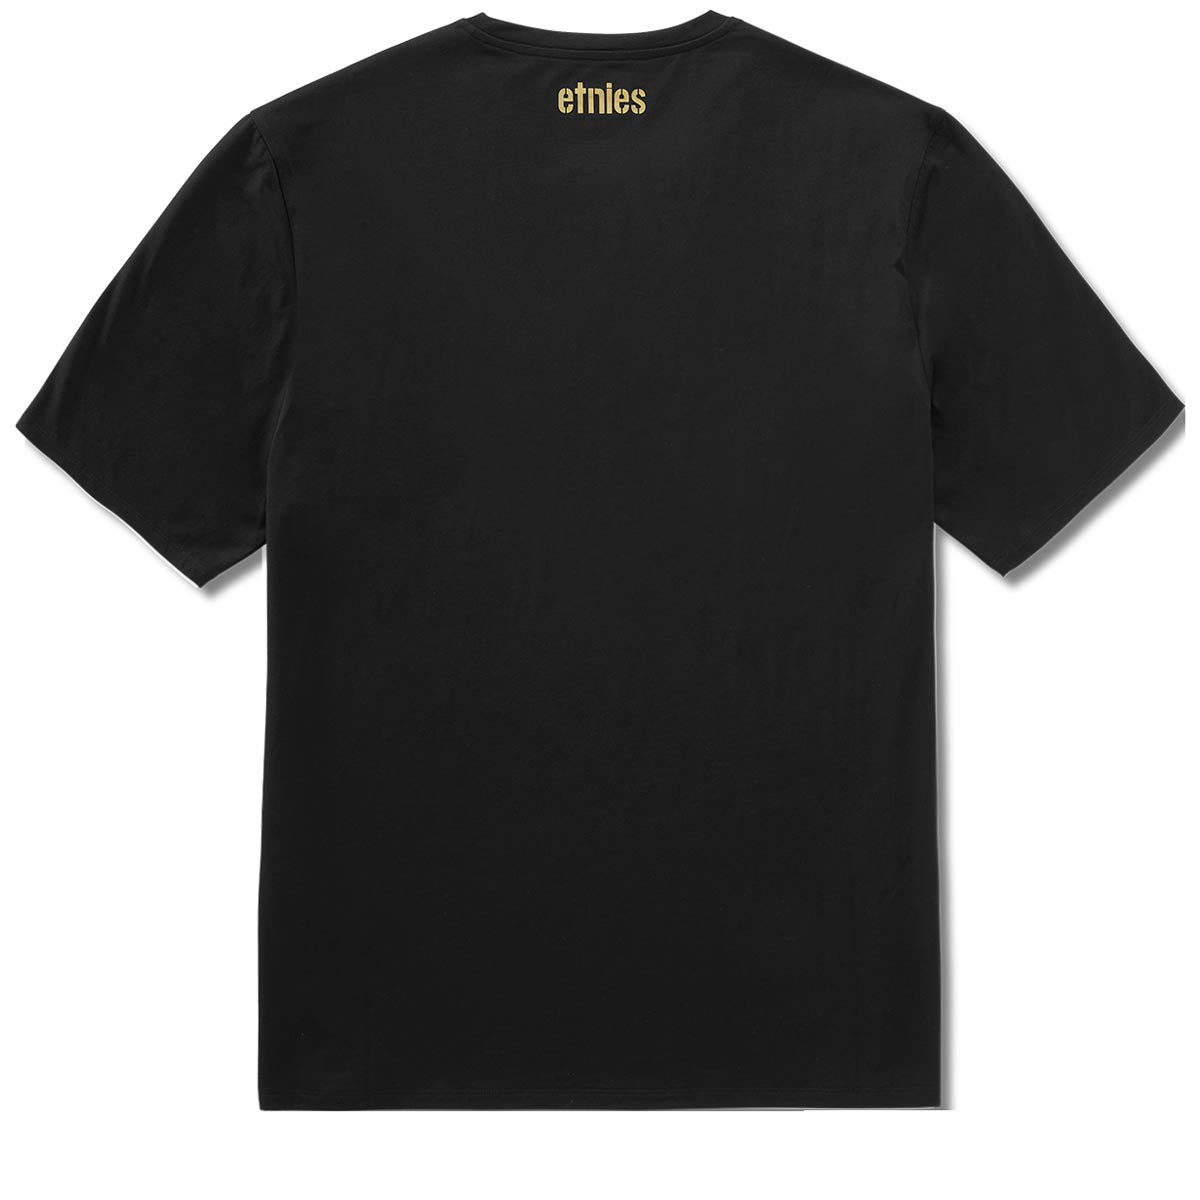 Etnies AG Tech T-Shirt - Black image 2